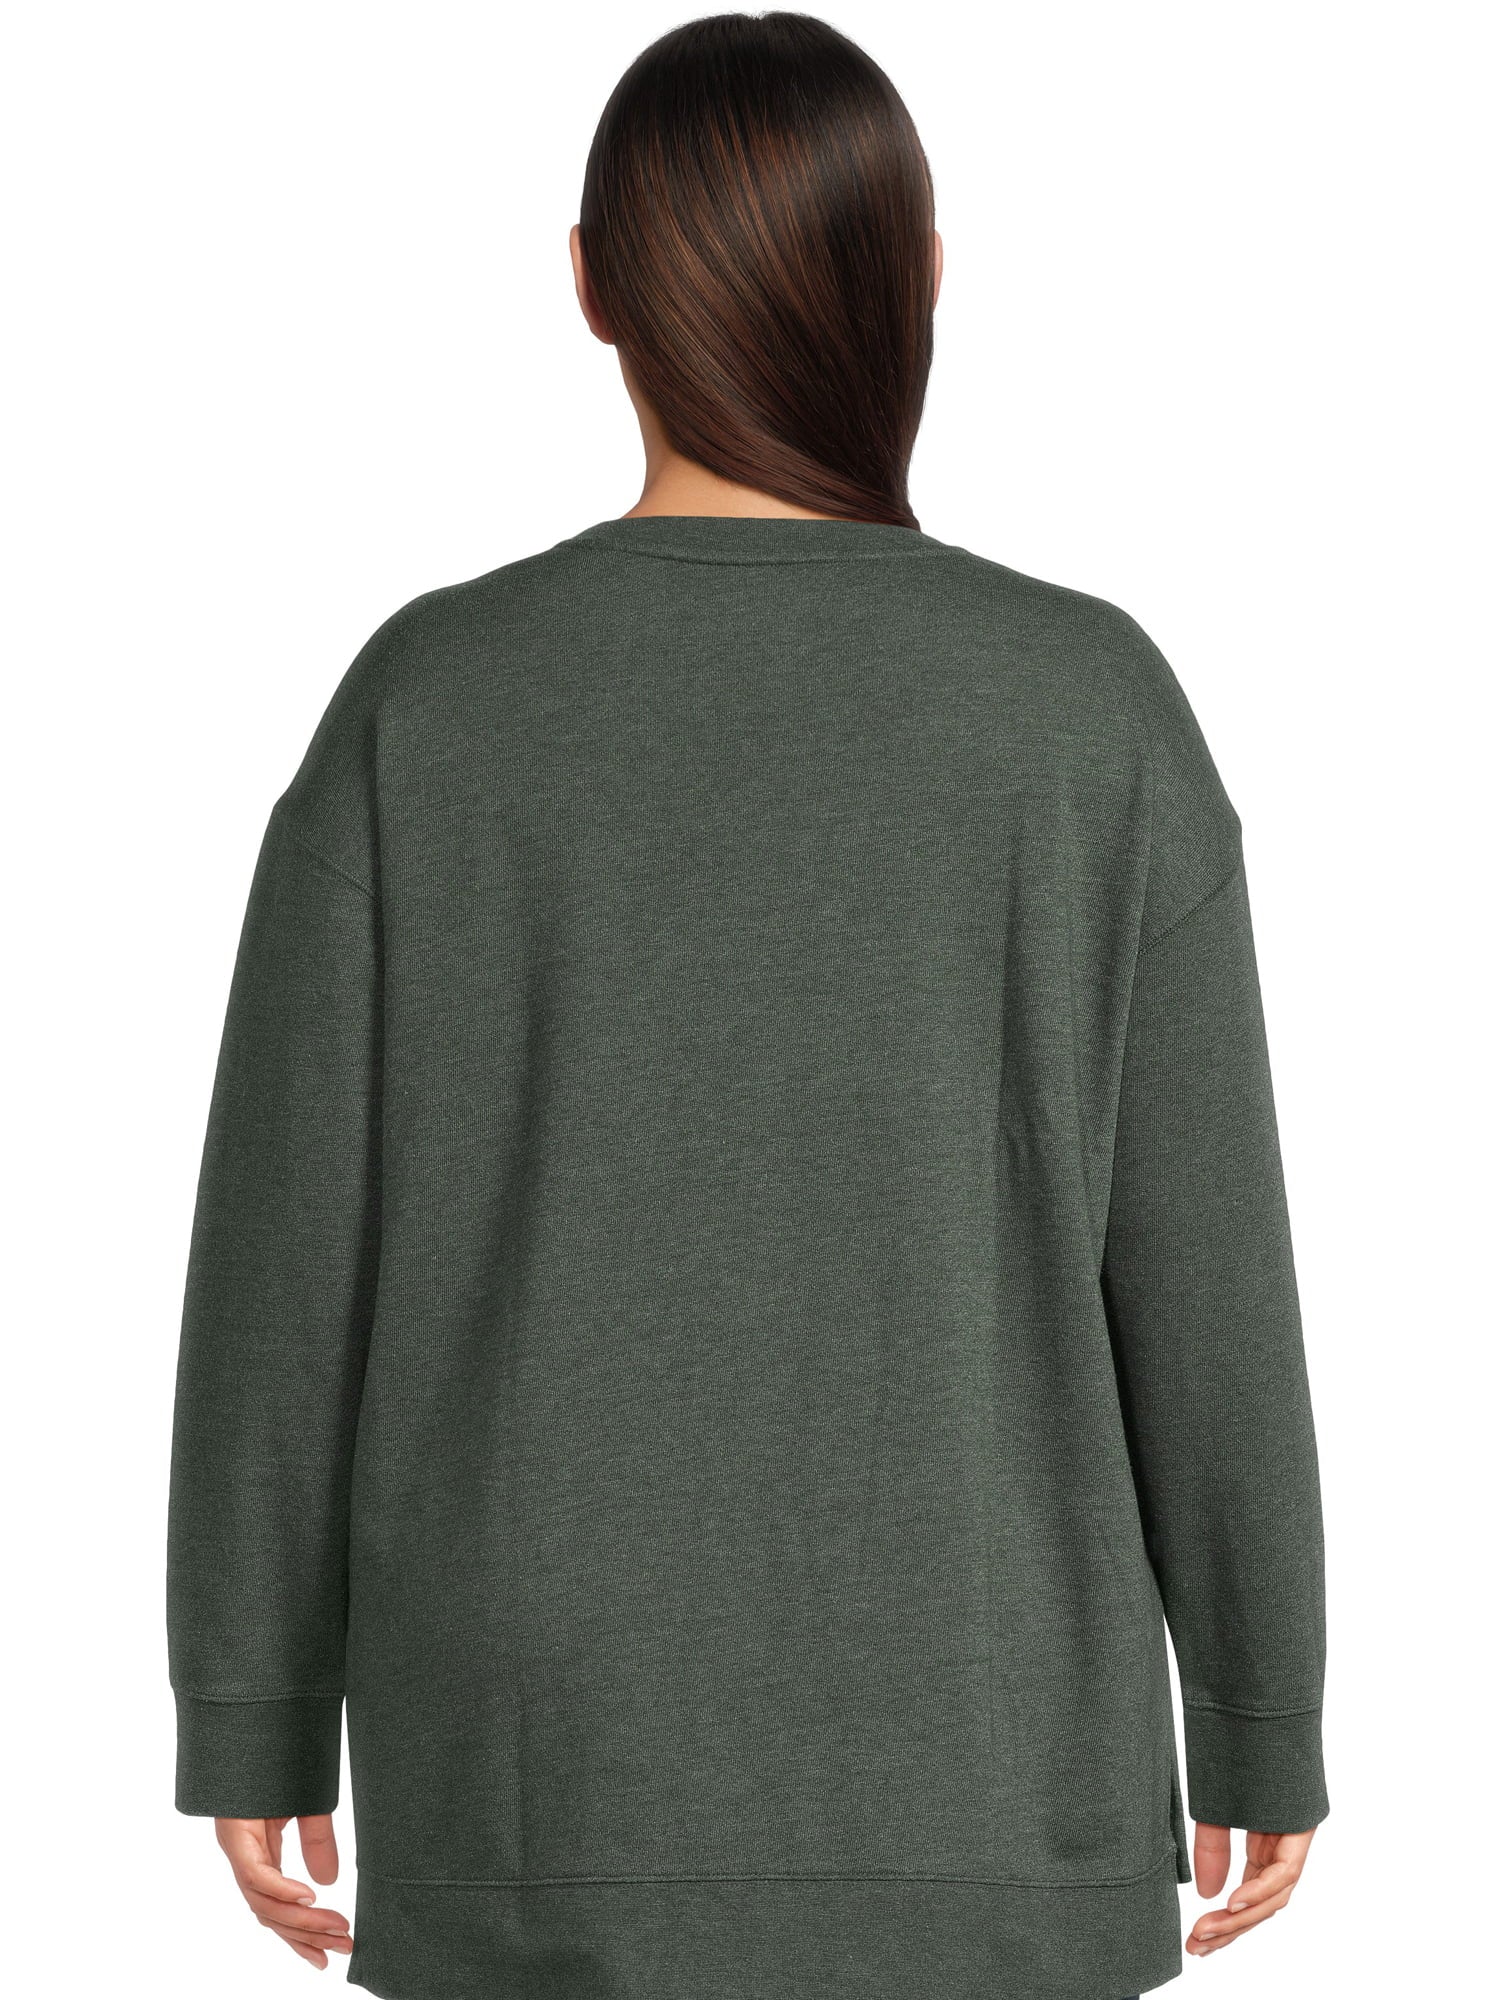 Terra & Sky Women's Plus High-Low French Terrycloth Sweatshirt - image 3 of 5